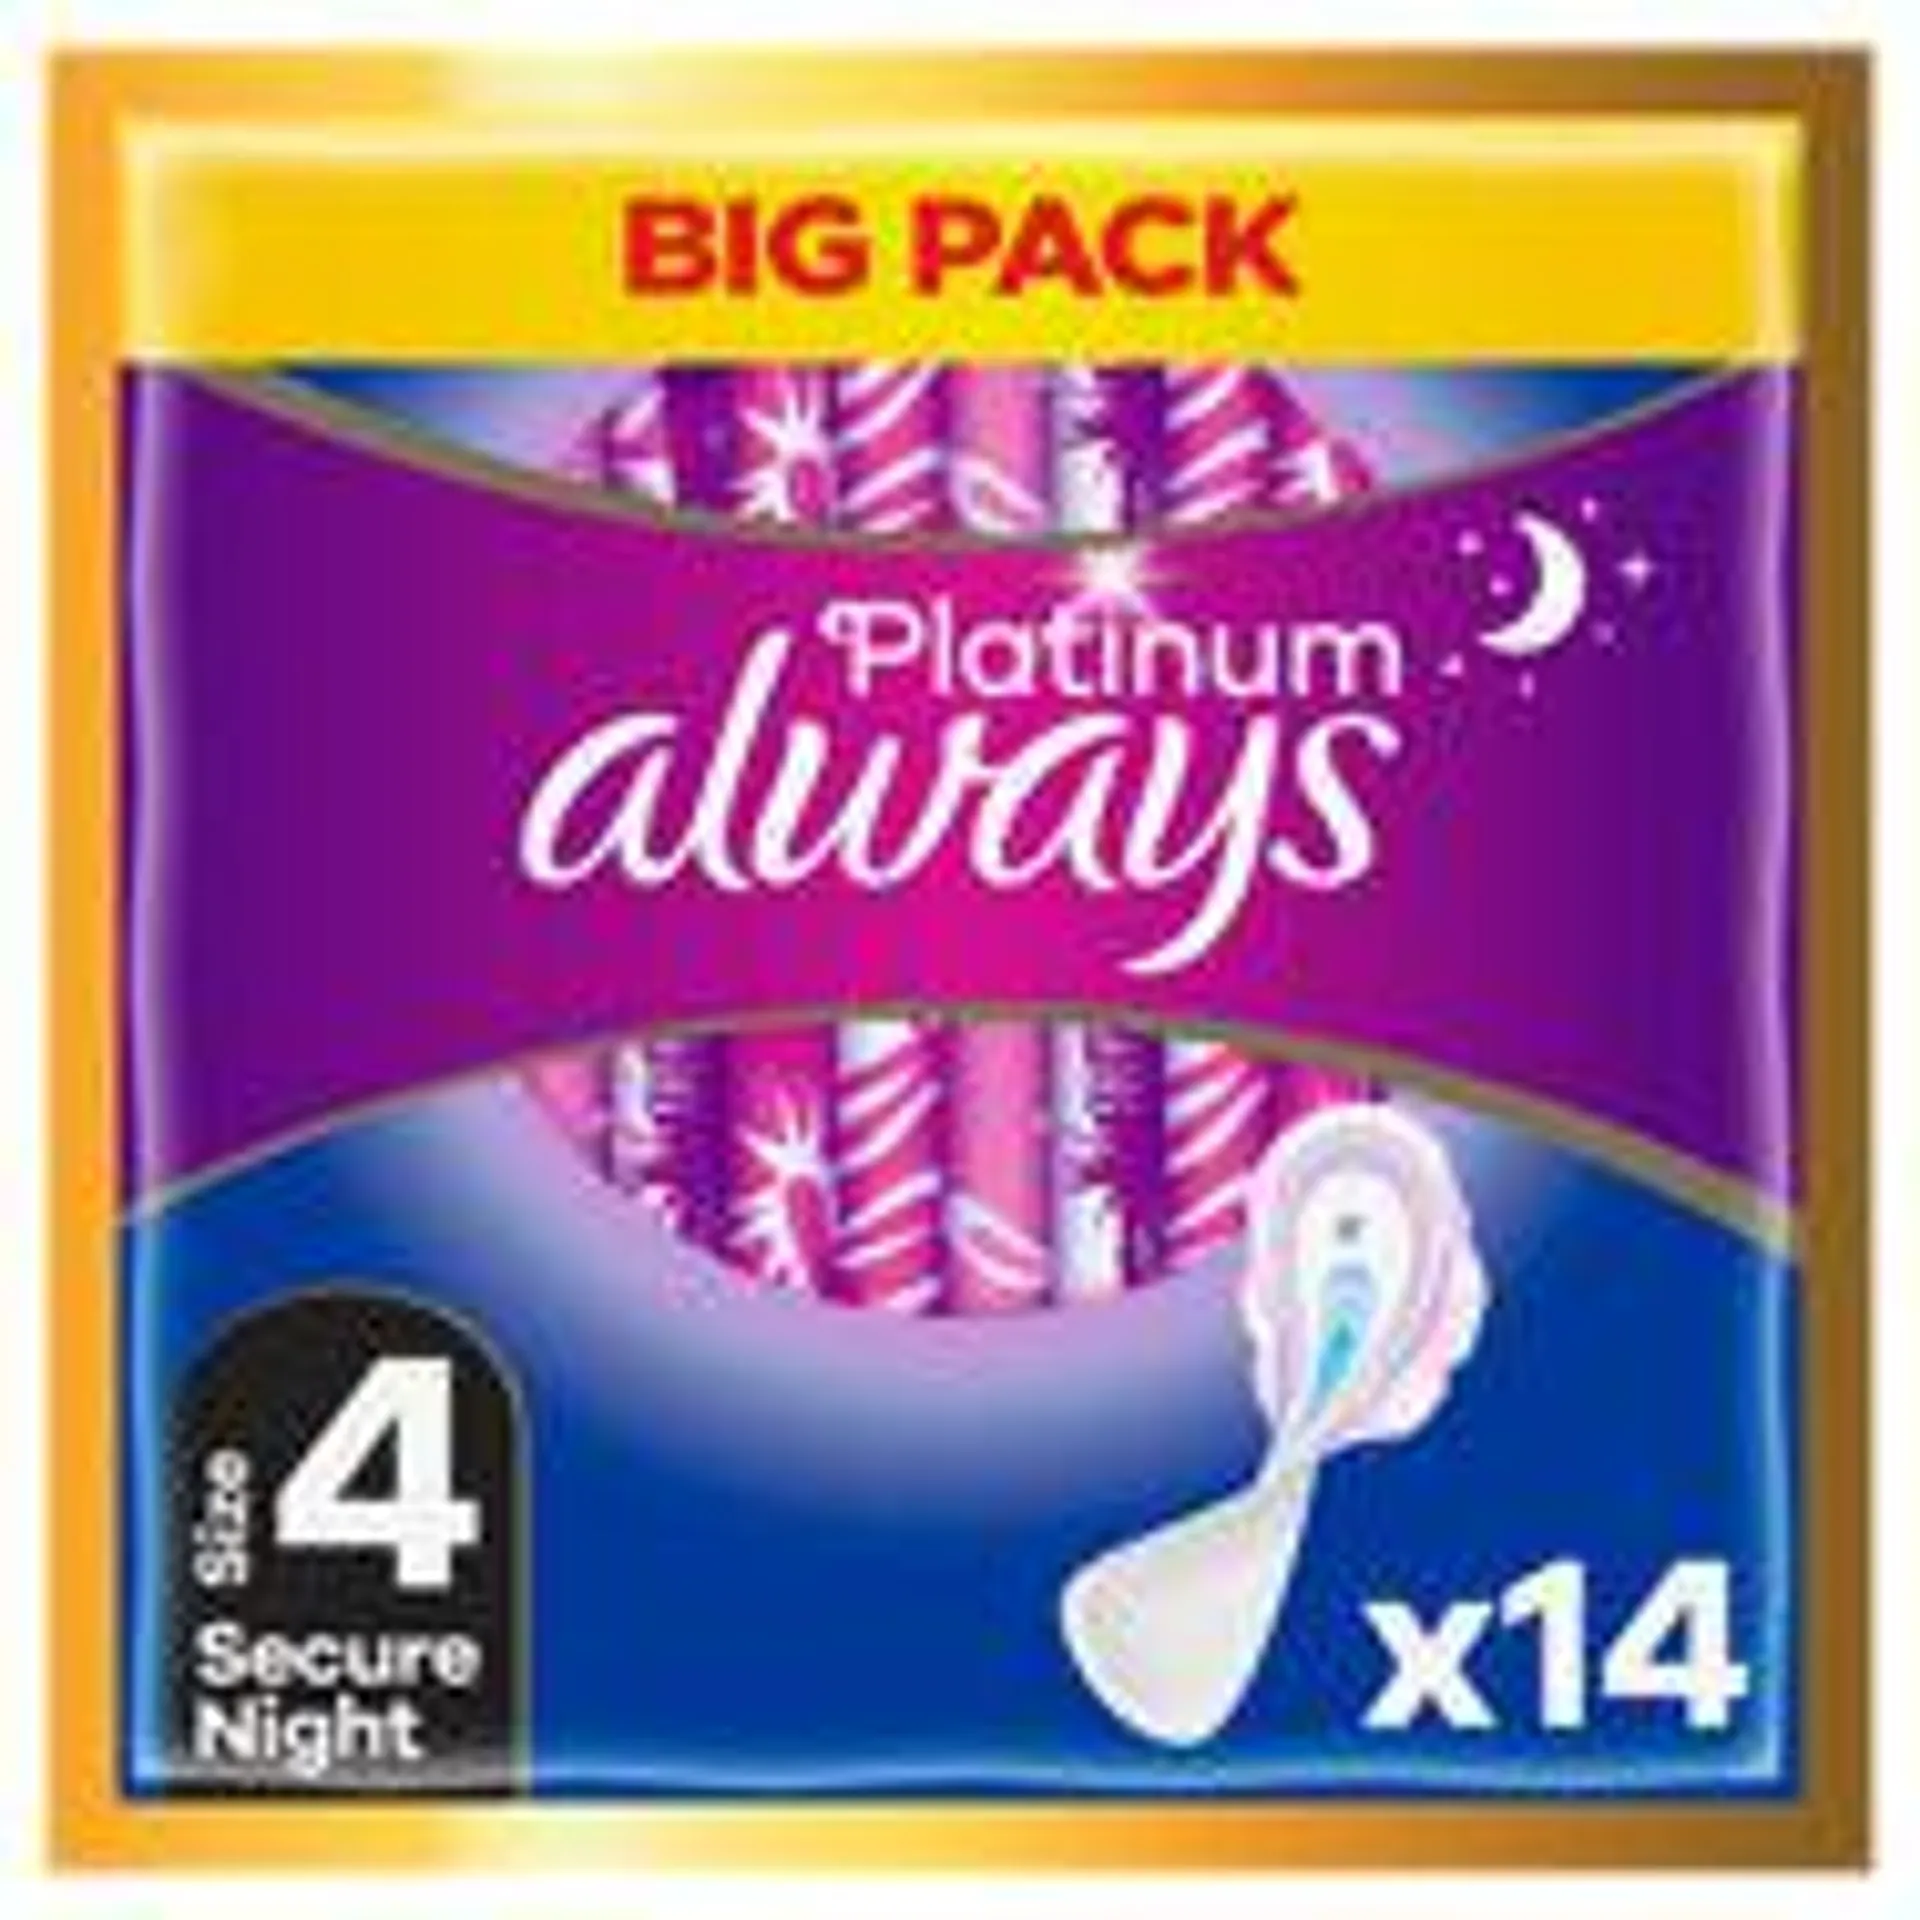 Always Platinum Secure Night (Size 4) Sanitary Towels Wings